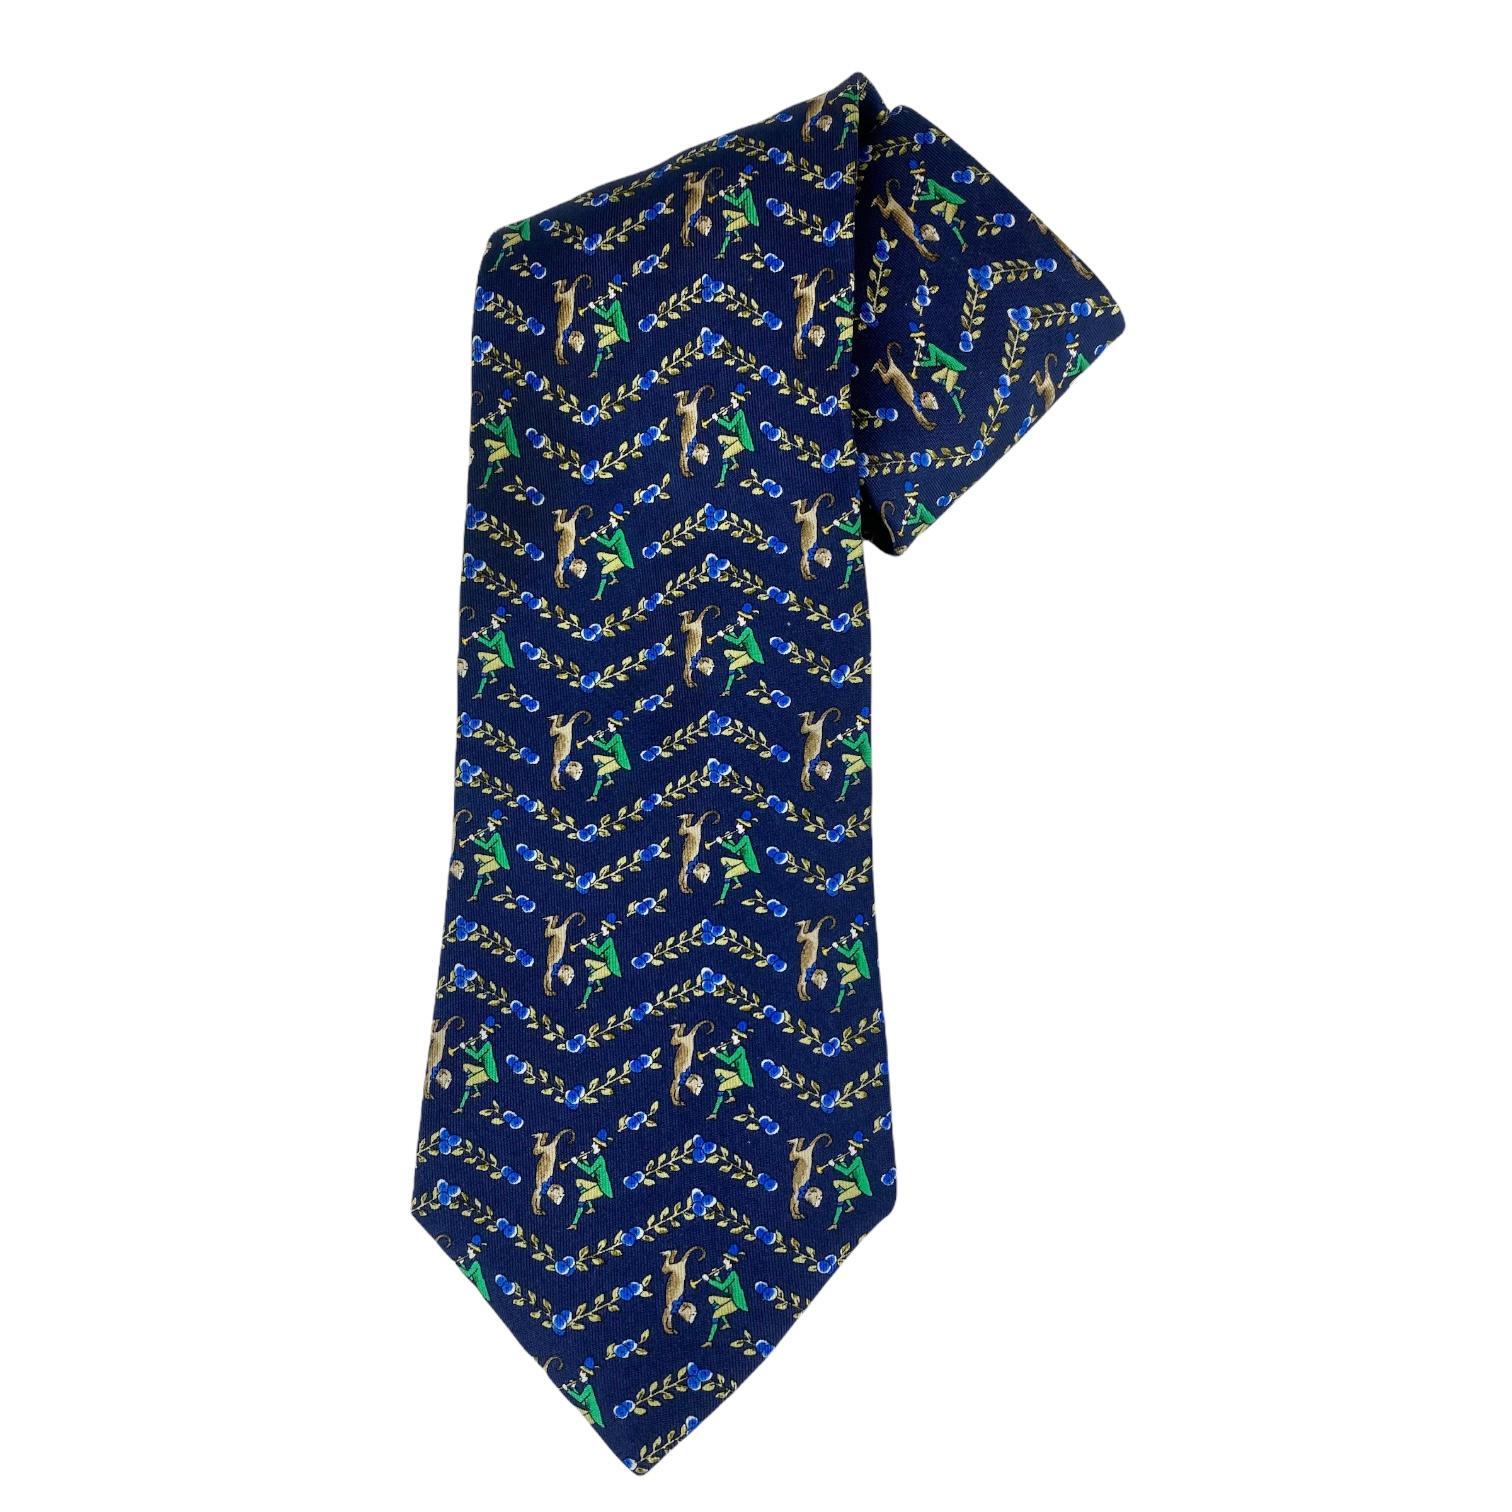 Black Salvatore Ferragamo Navy and Green Print Tie